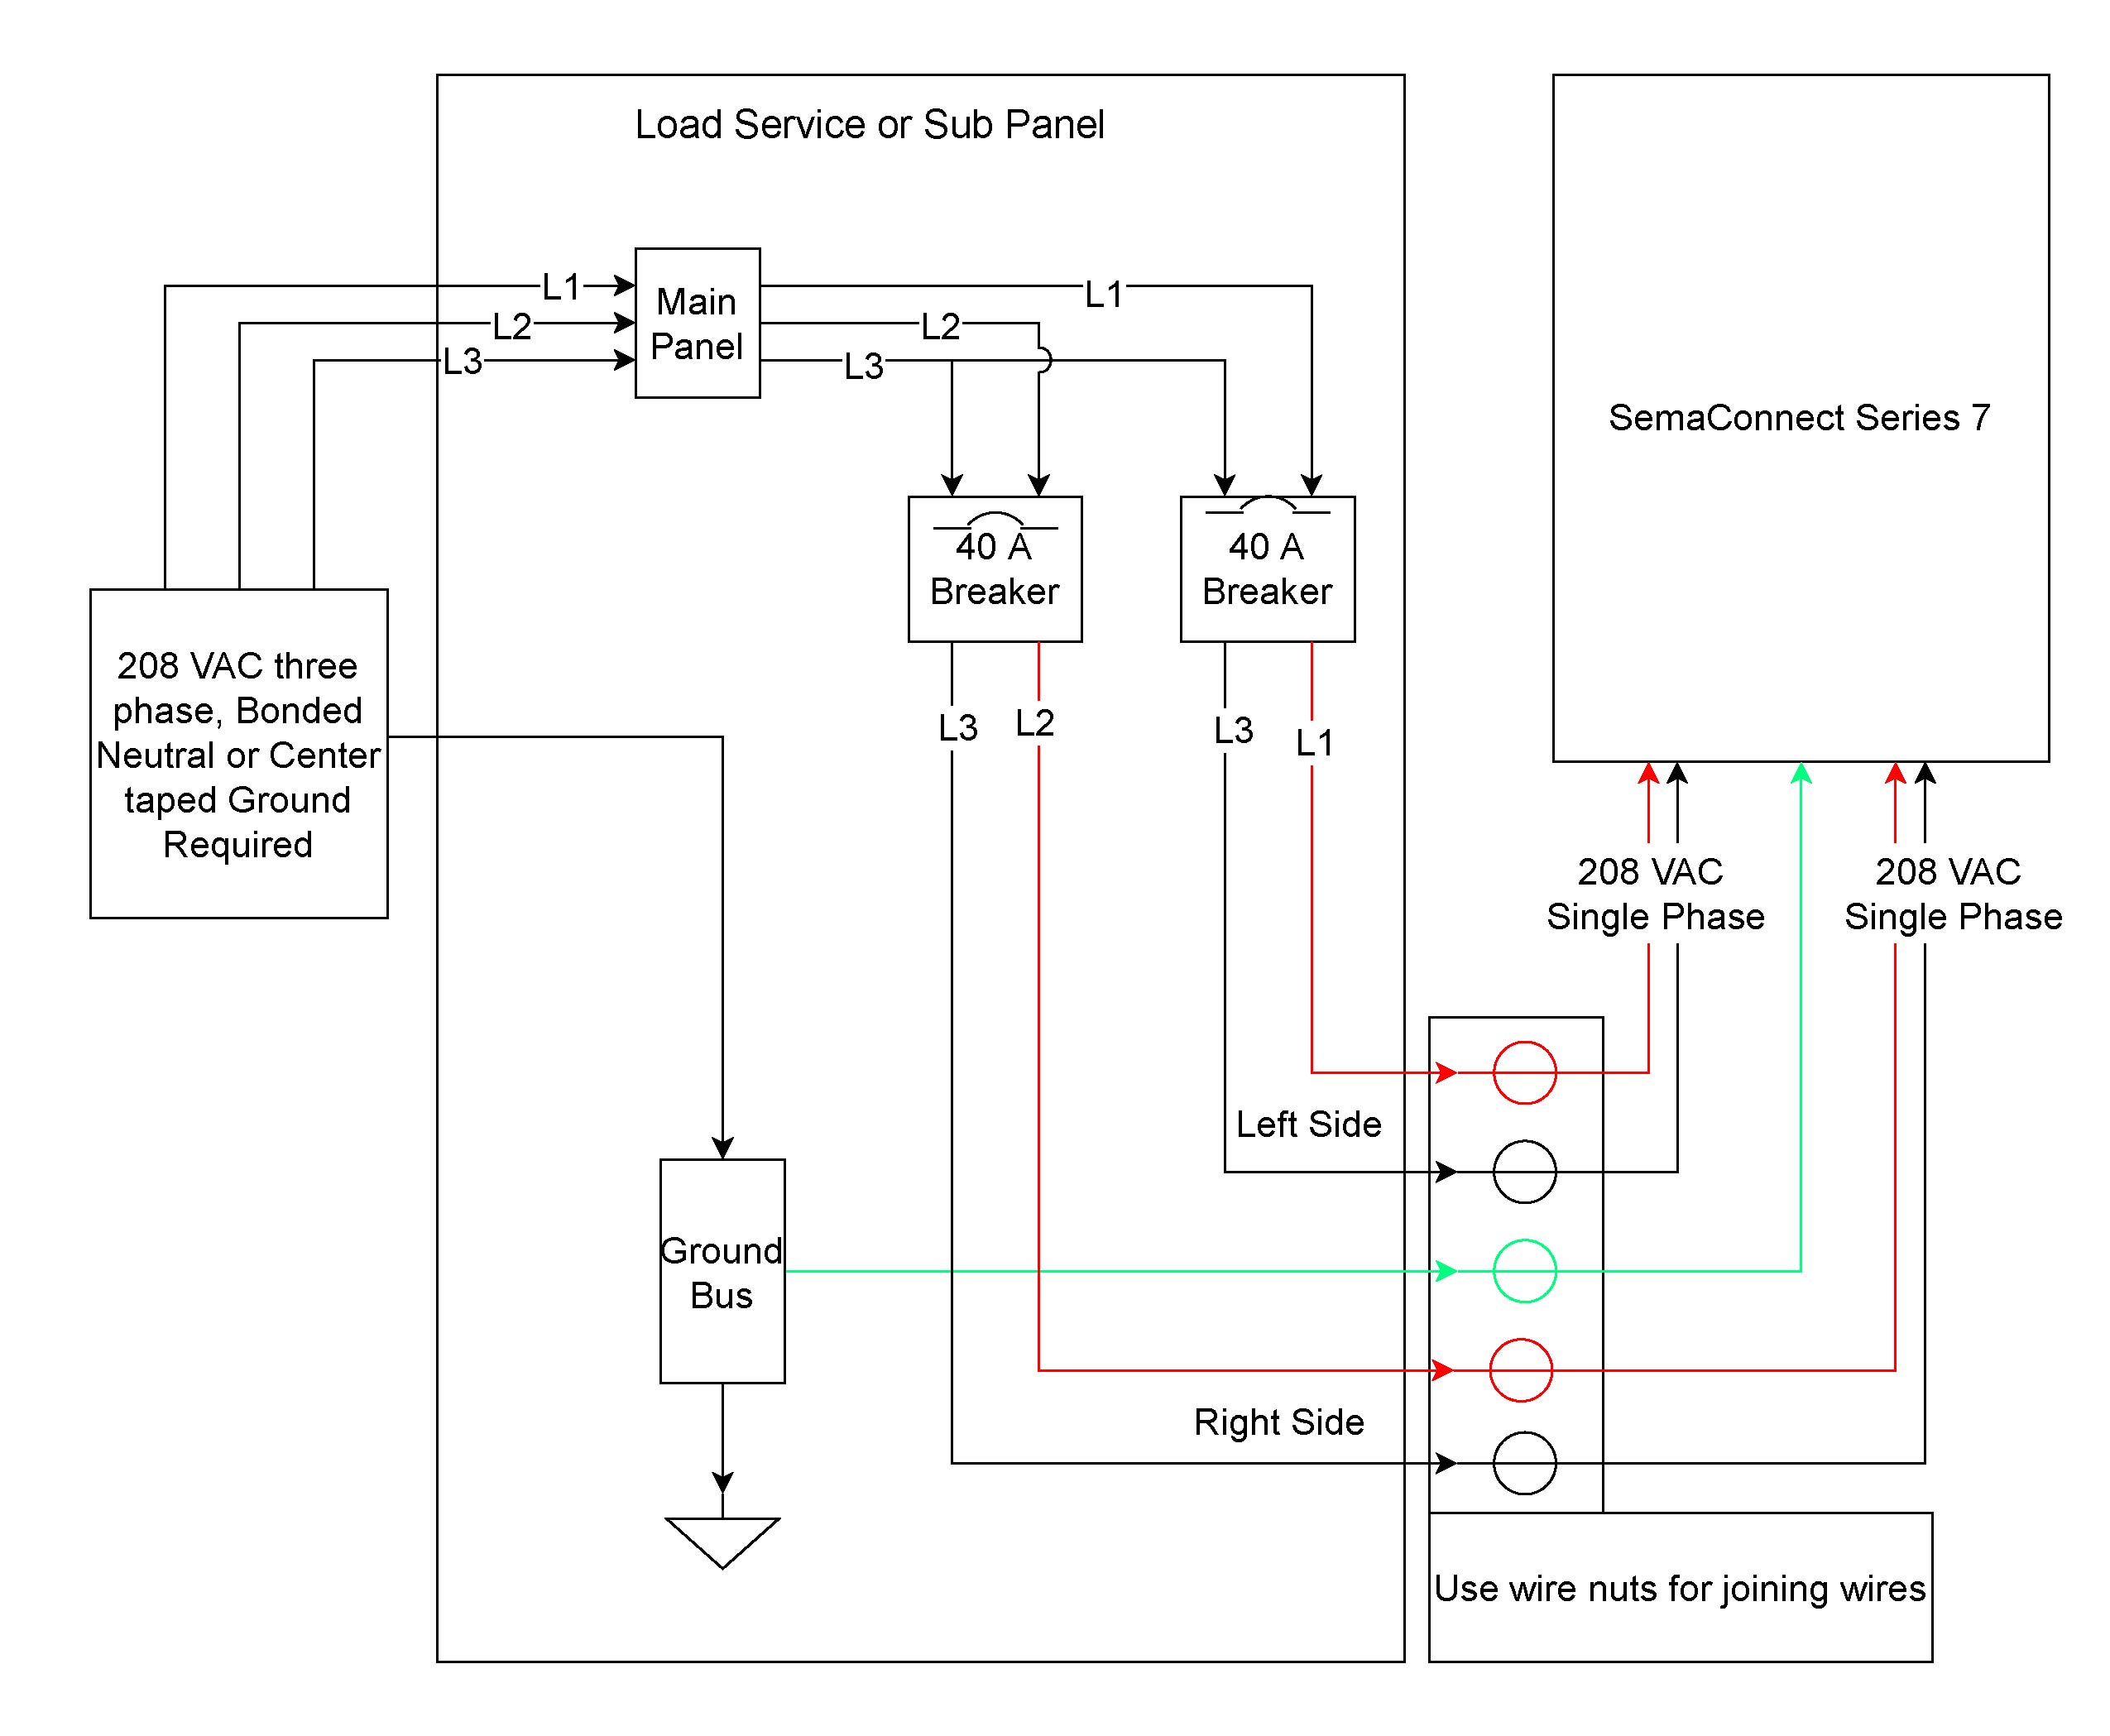 full 110cc gy6 atv wiring diagram